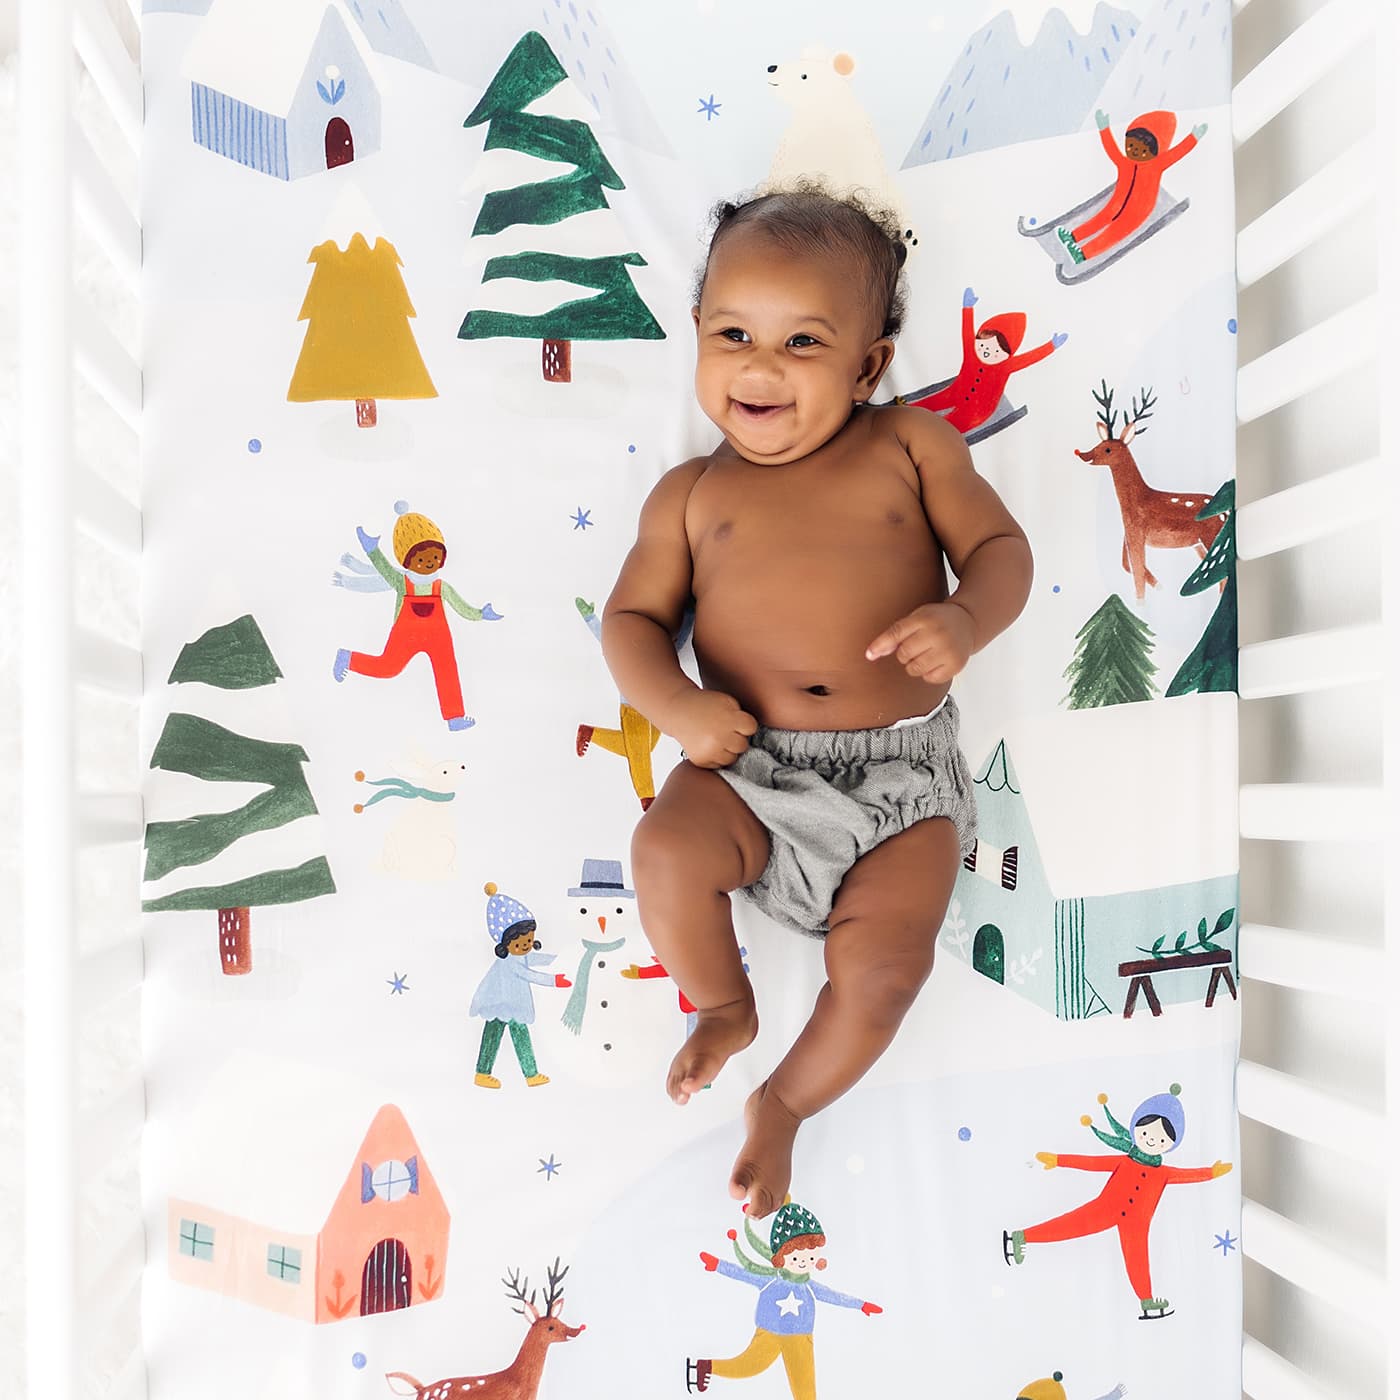 Snowy Day baby crib sheet, winter baby crib sheet, holiday crib sheet, Christmas crib sheet, winter crib sheet, snow crib sheet, reindeer crib sheet